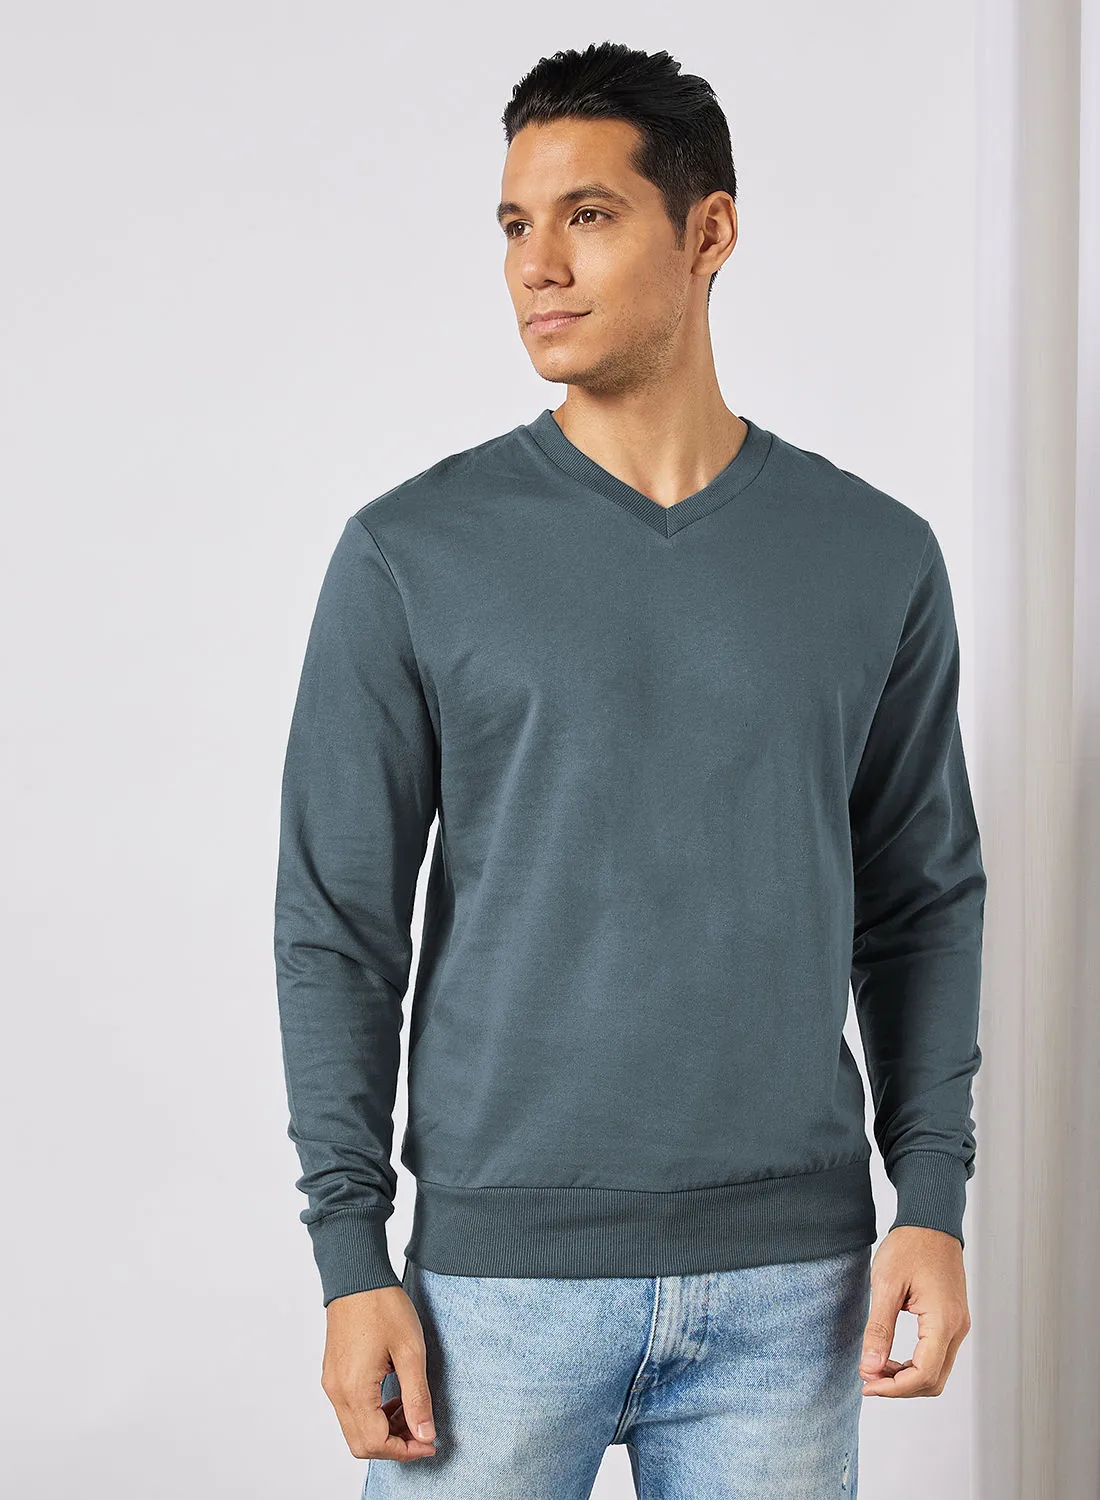 Noon East Men's V-Neck Cotton Sweatshirt with Rib detail Pine